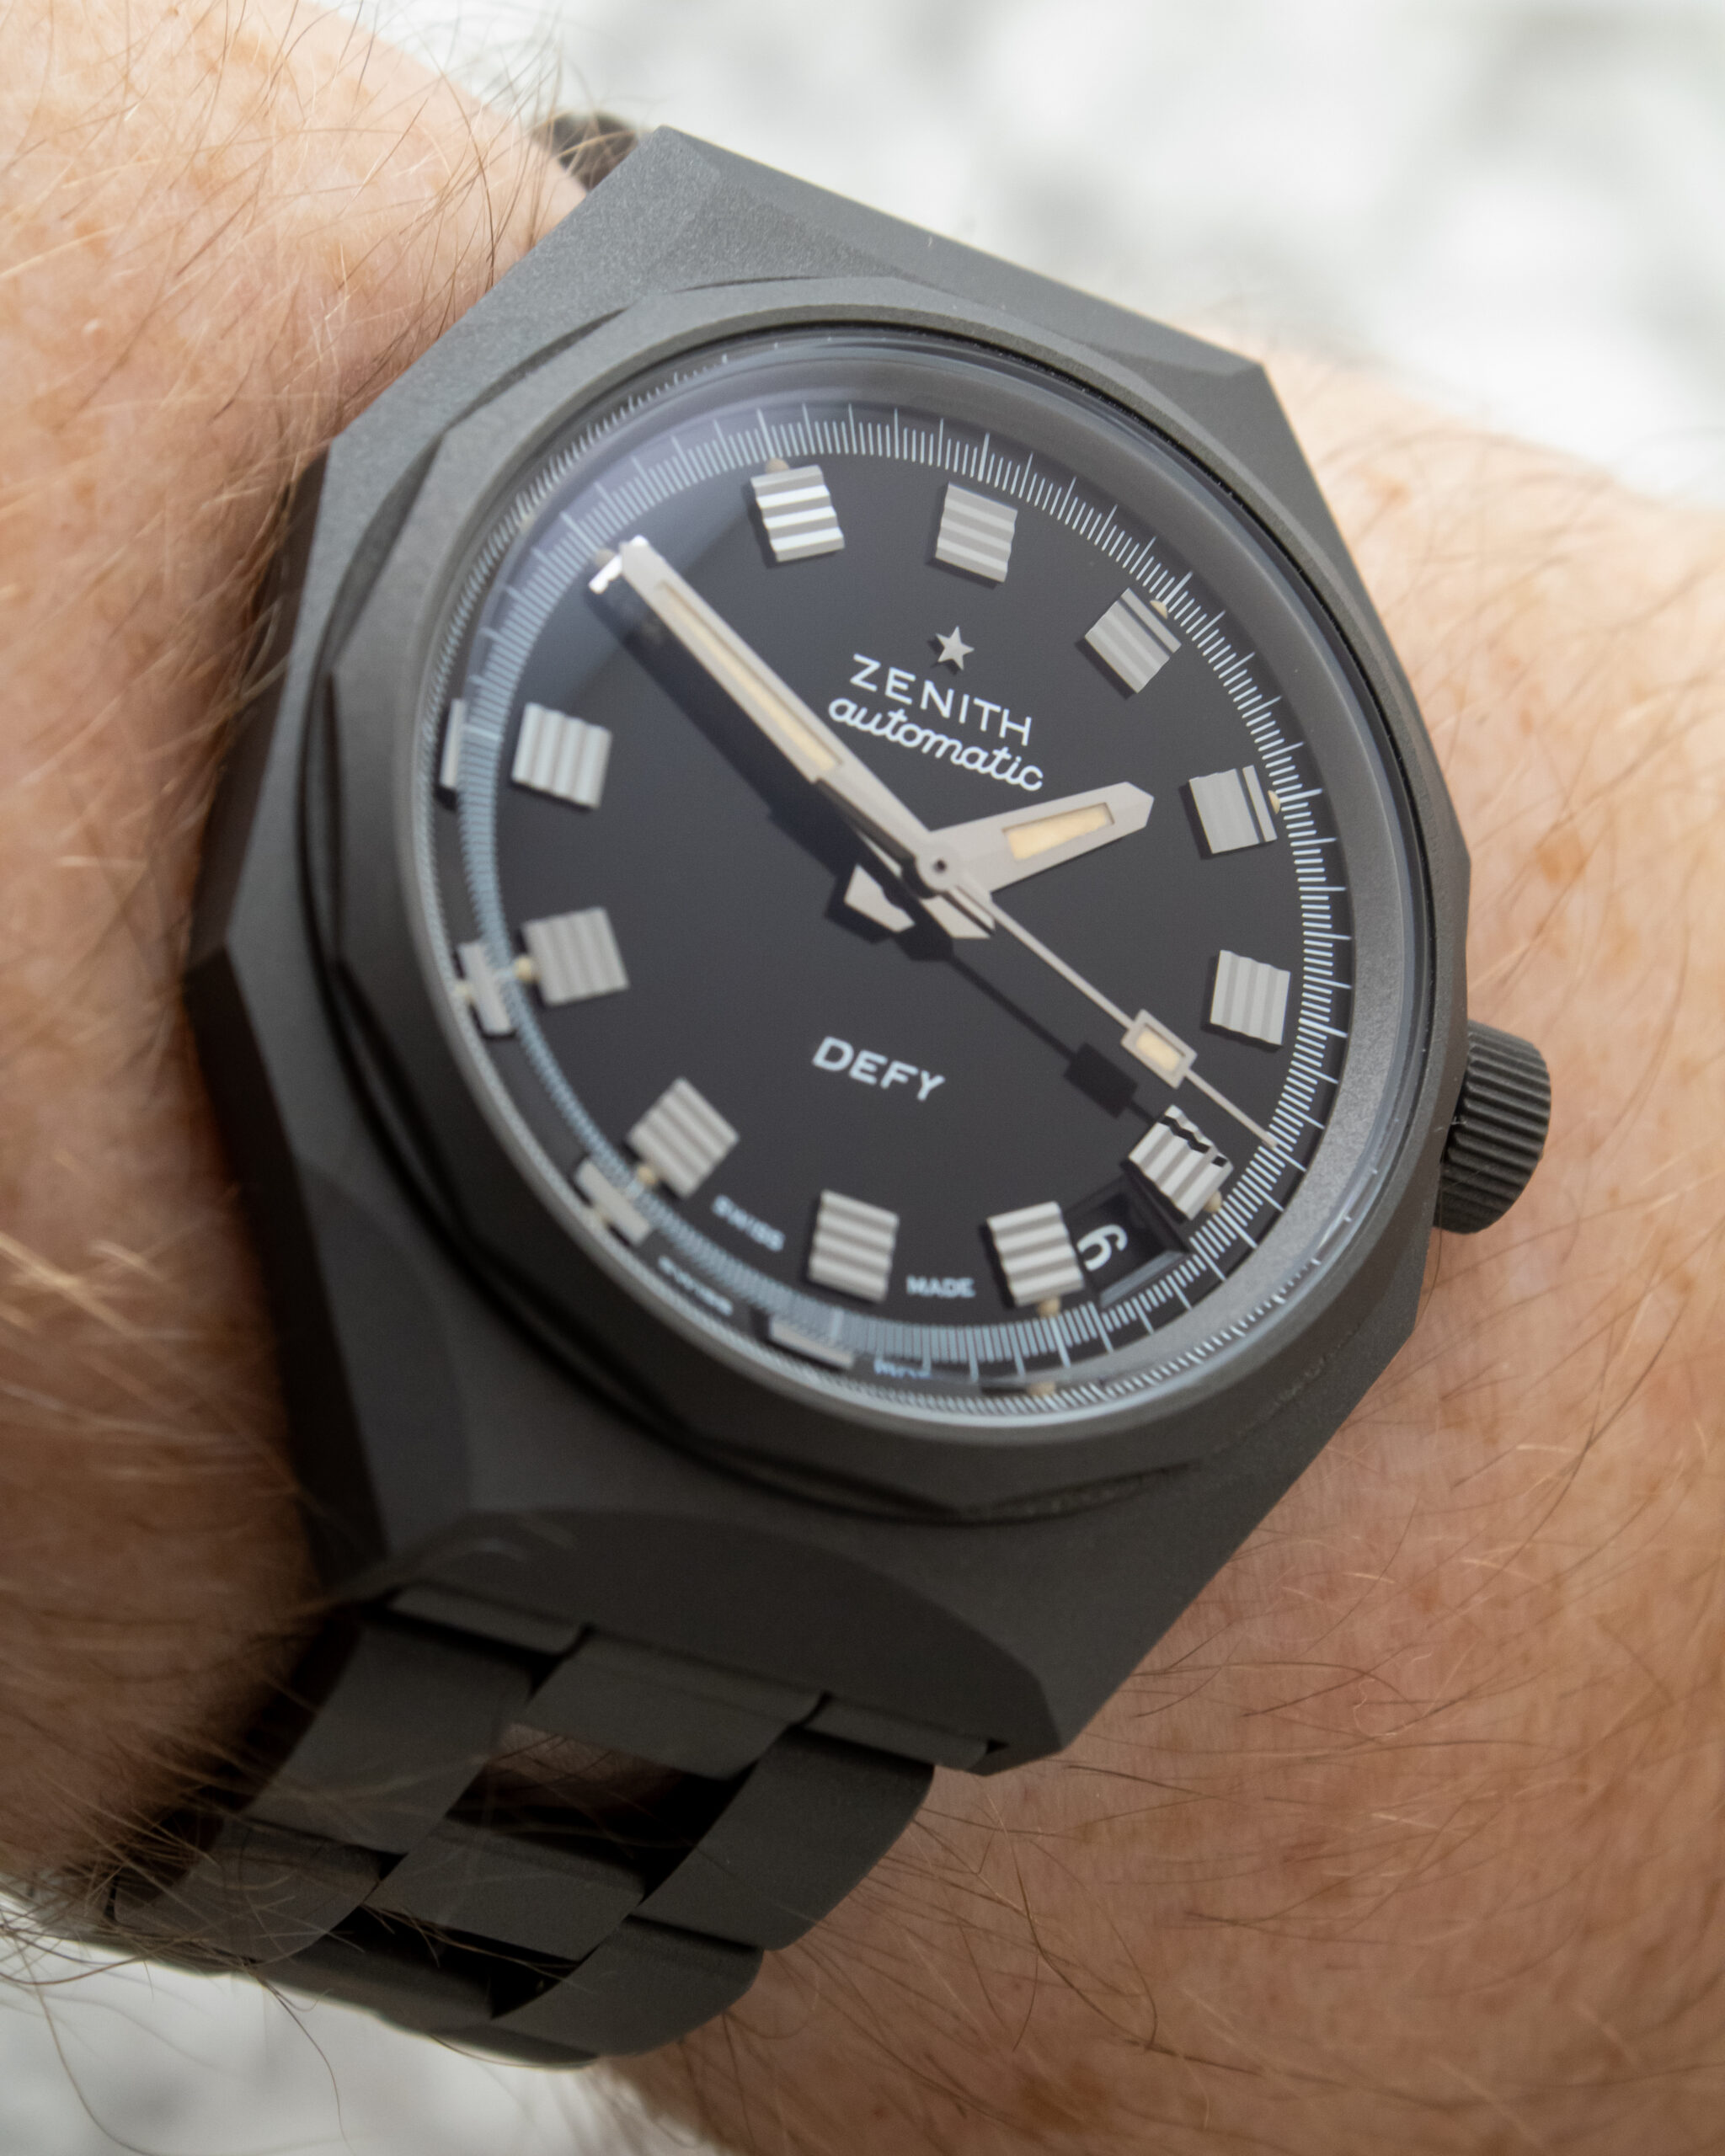 Zenith Watches: Zenith Presents Its New Defy Revival Shadow Watch